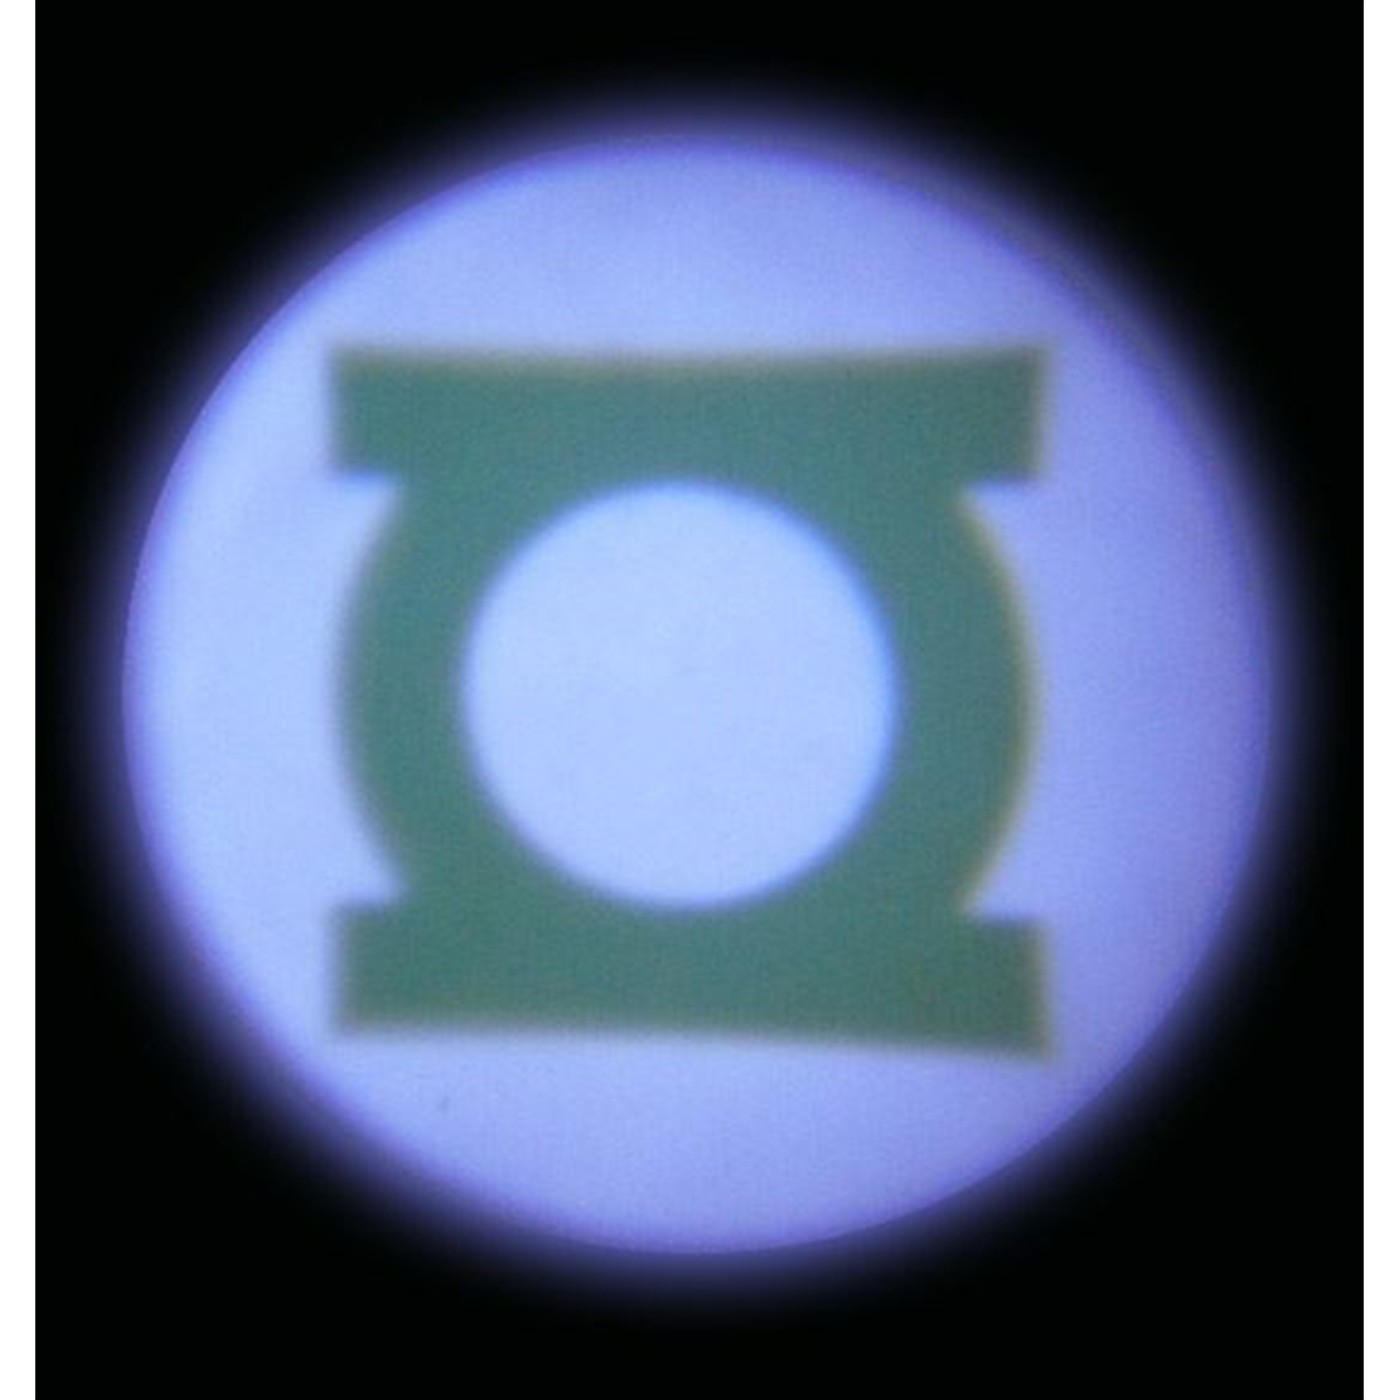 Green Lantern Movie Projection Ring